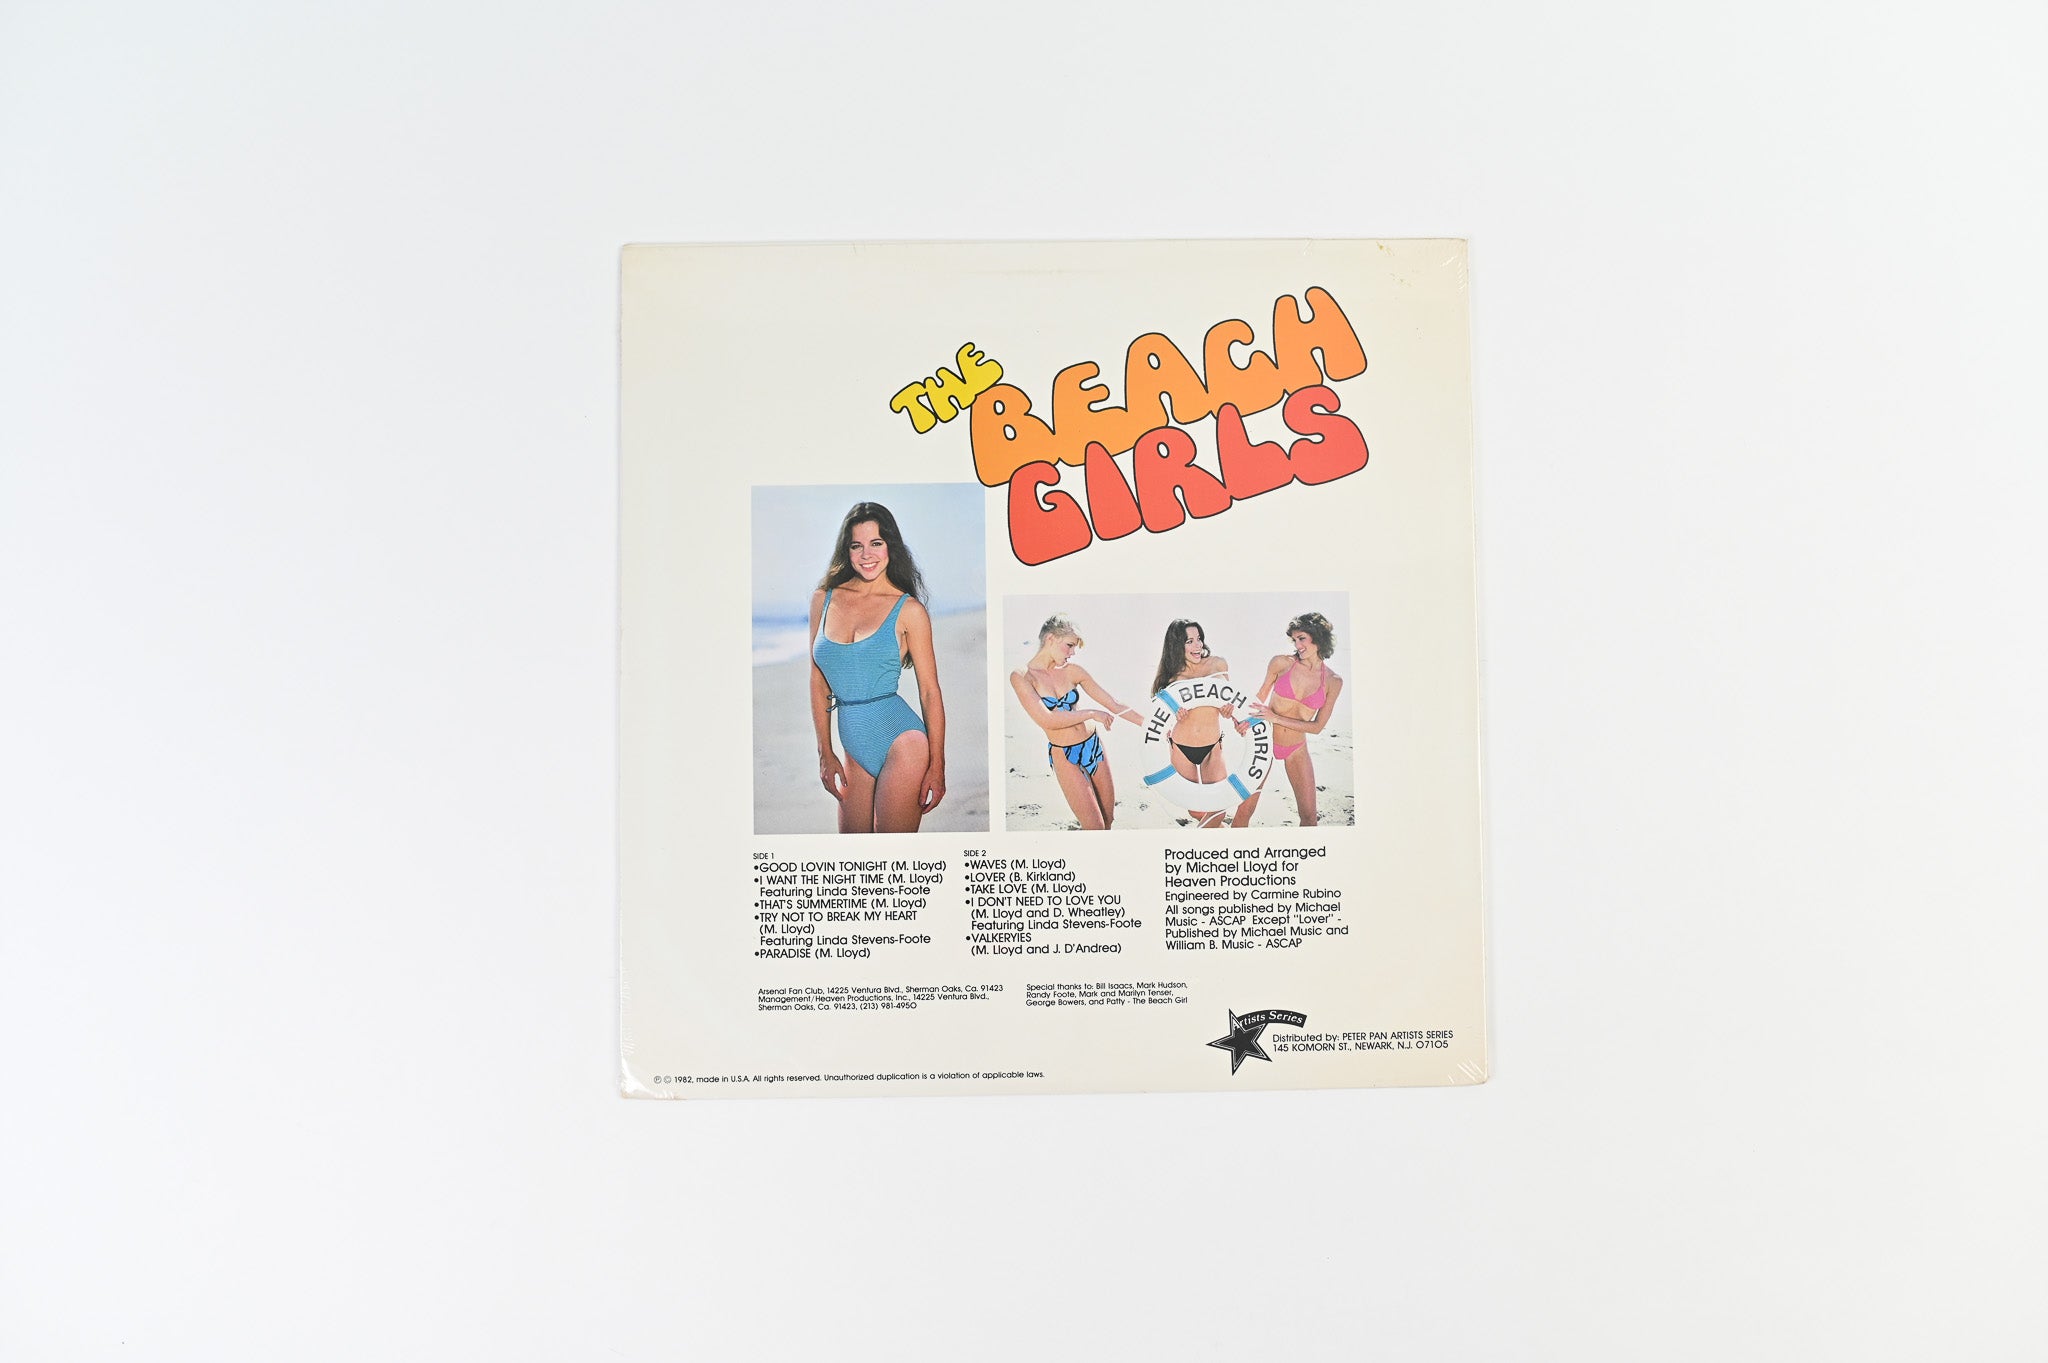 Arsenal - The Beach Girls Original Soundtrack on Peter Pan Artists Sealed